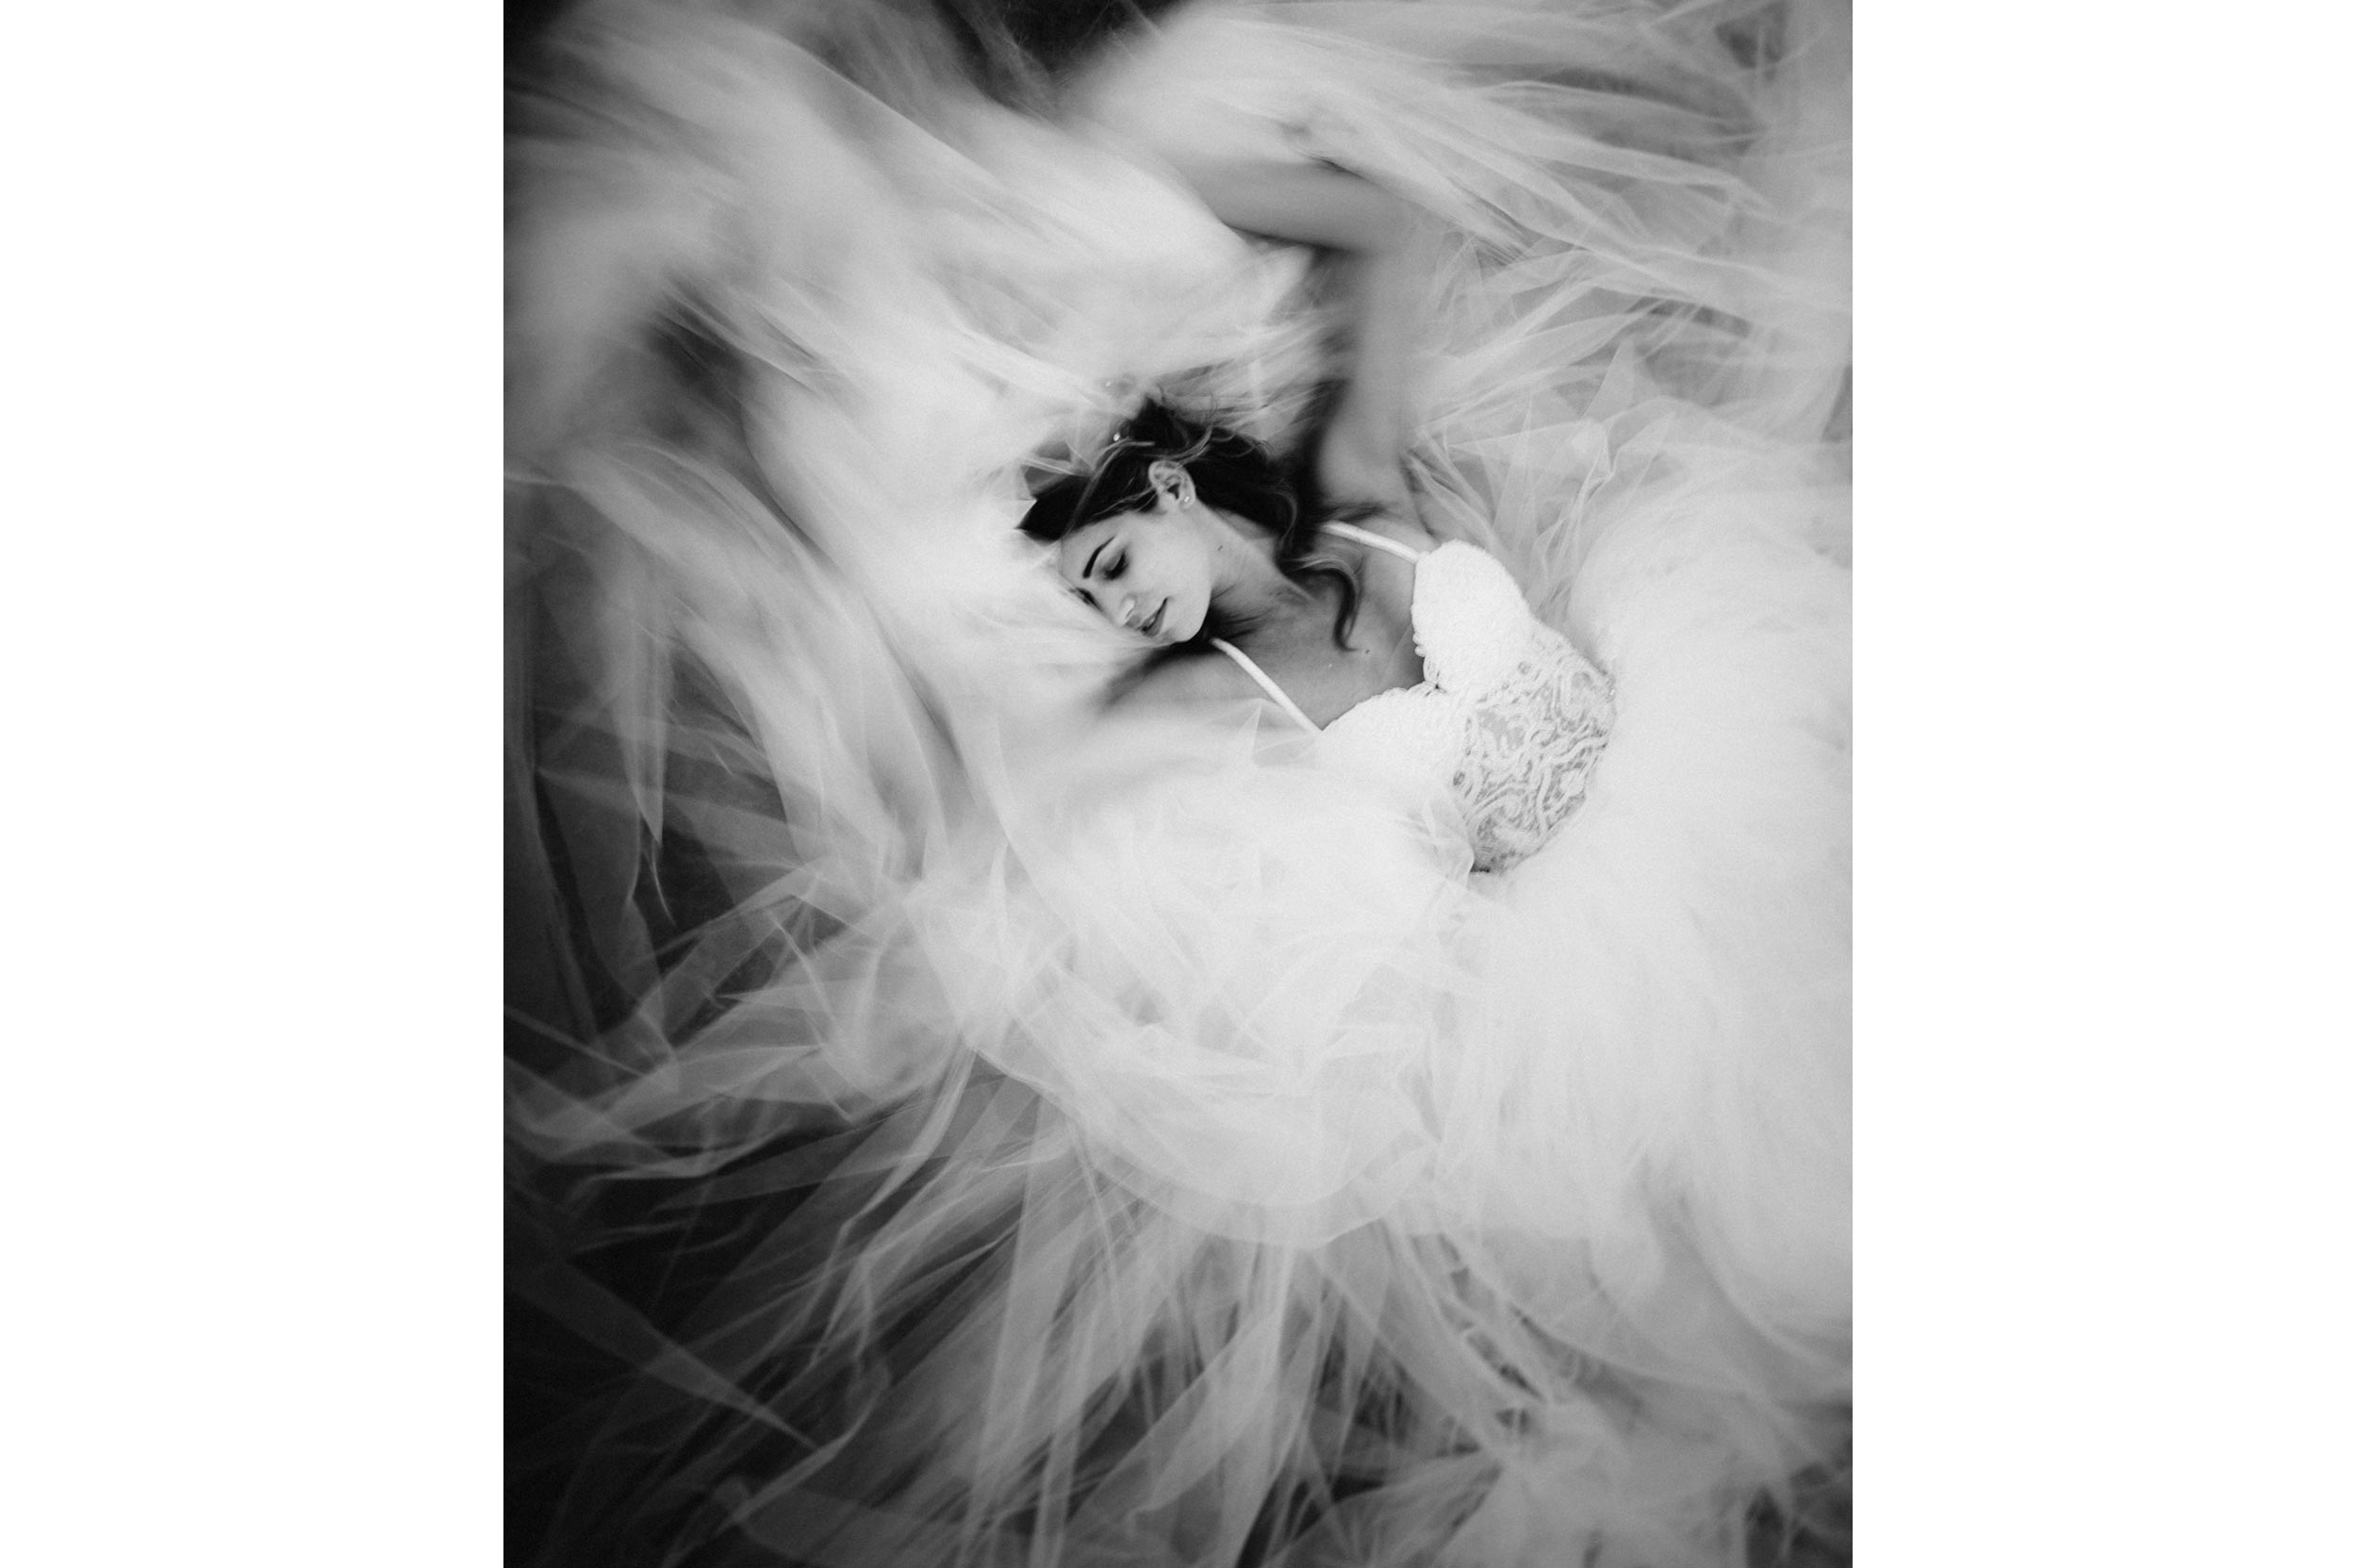 bridal dress portrait black and white wedding photography by Alessandro Avenali.jpg